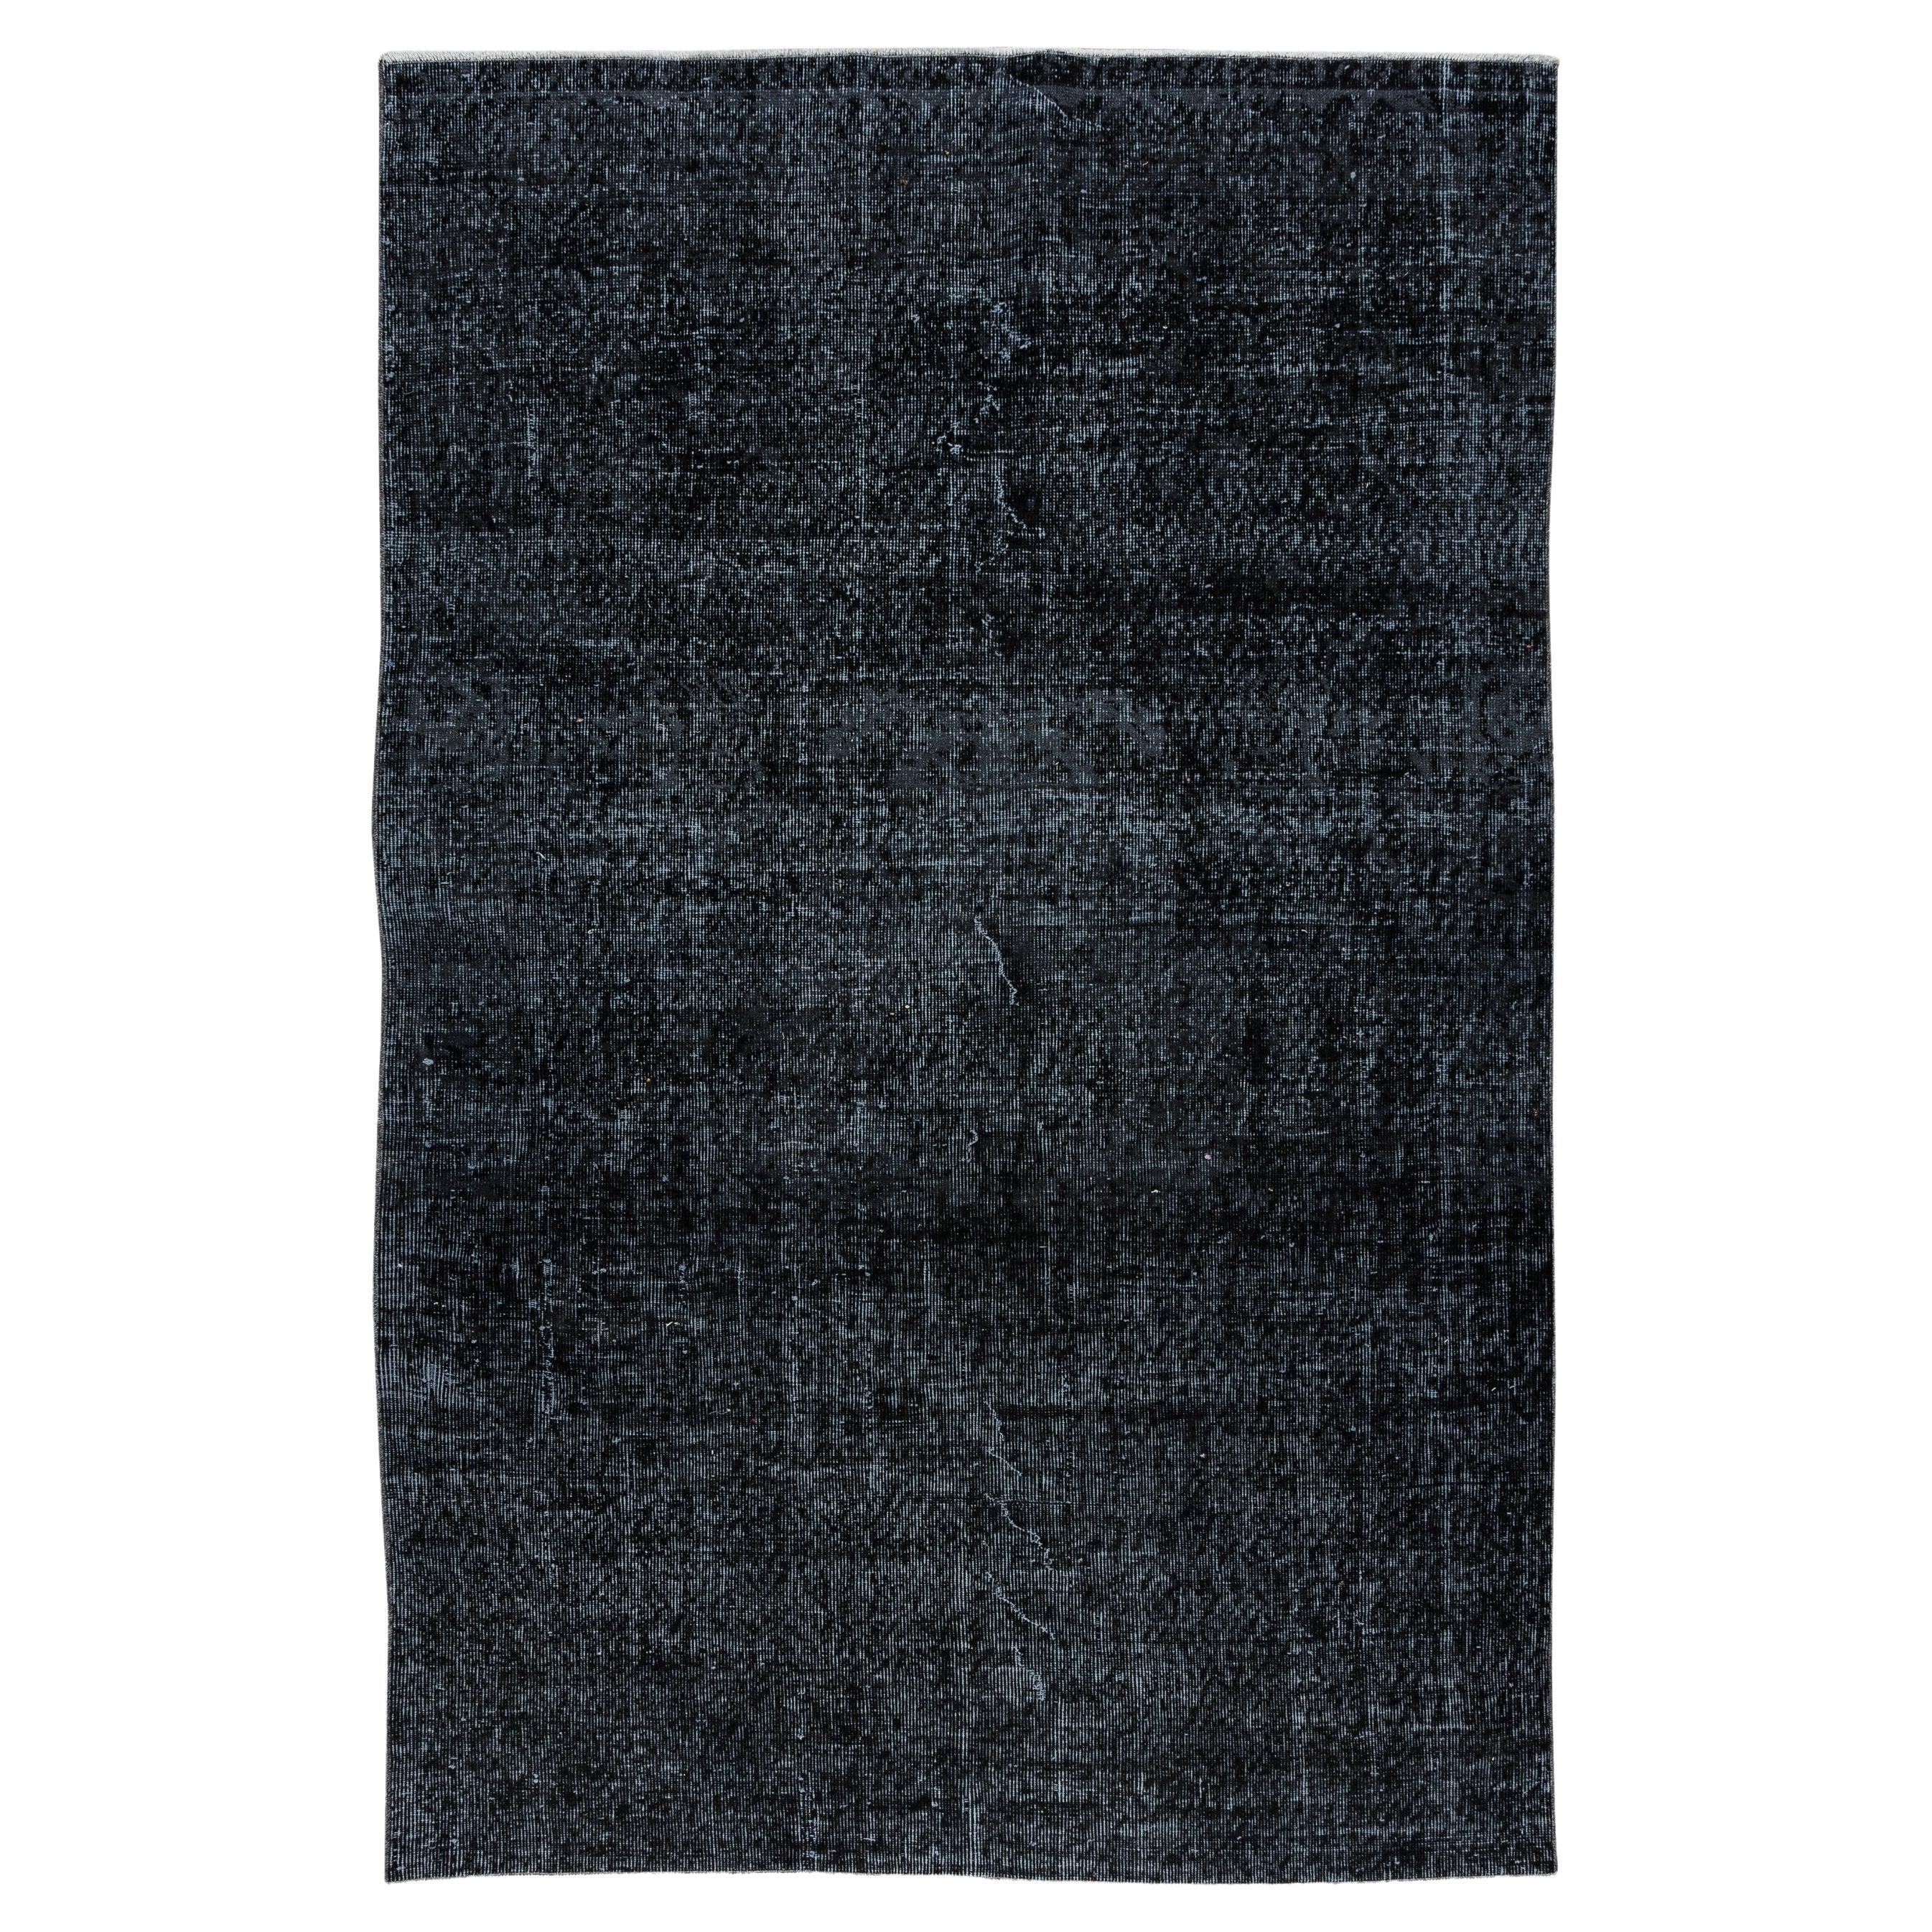 5.4x8.3 Ft Contemporary Turkish Plain Black Area Rug, Handknotted Vintage Carpet